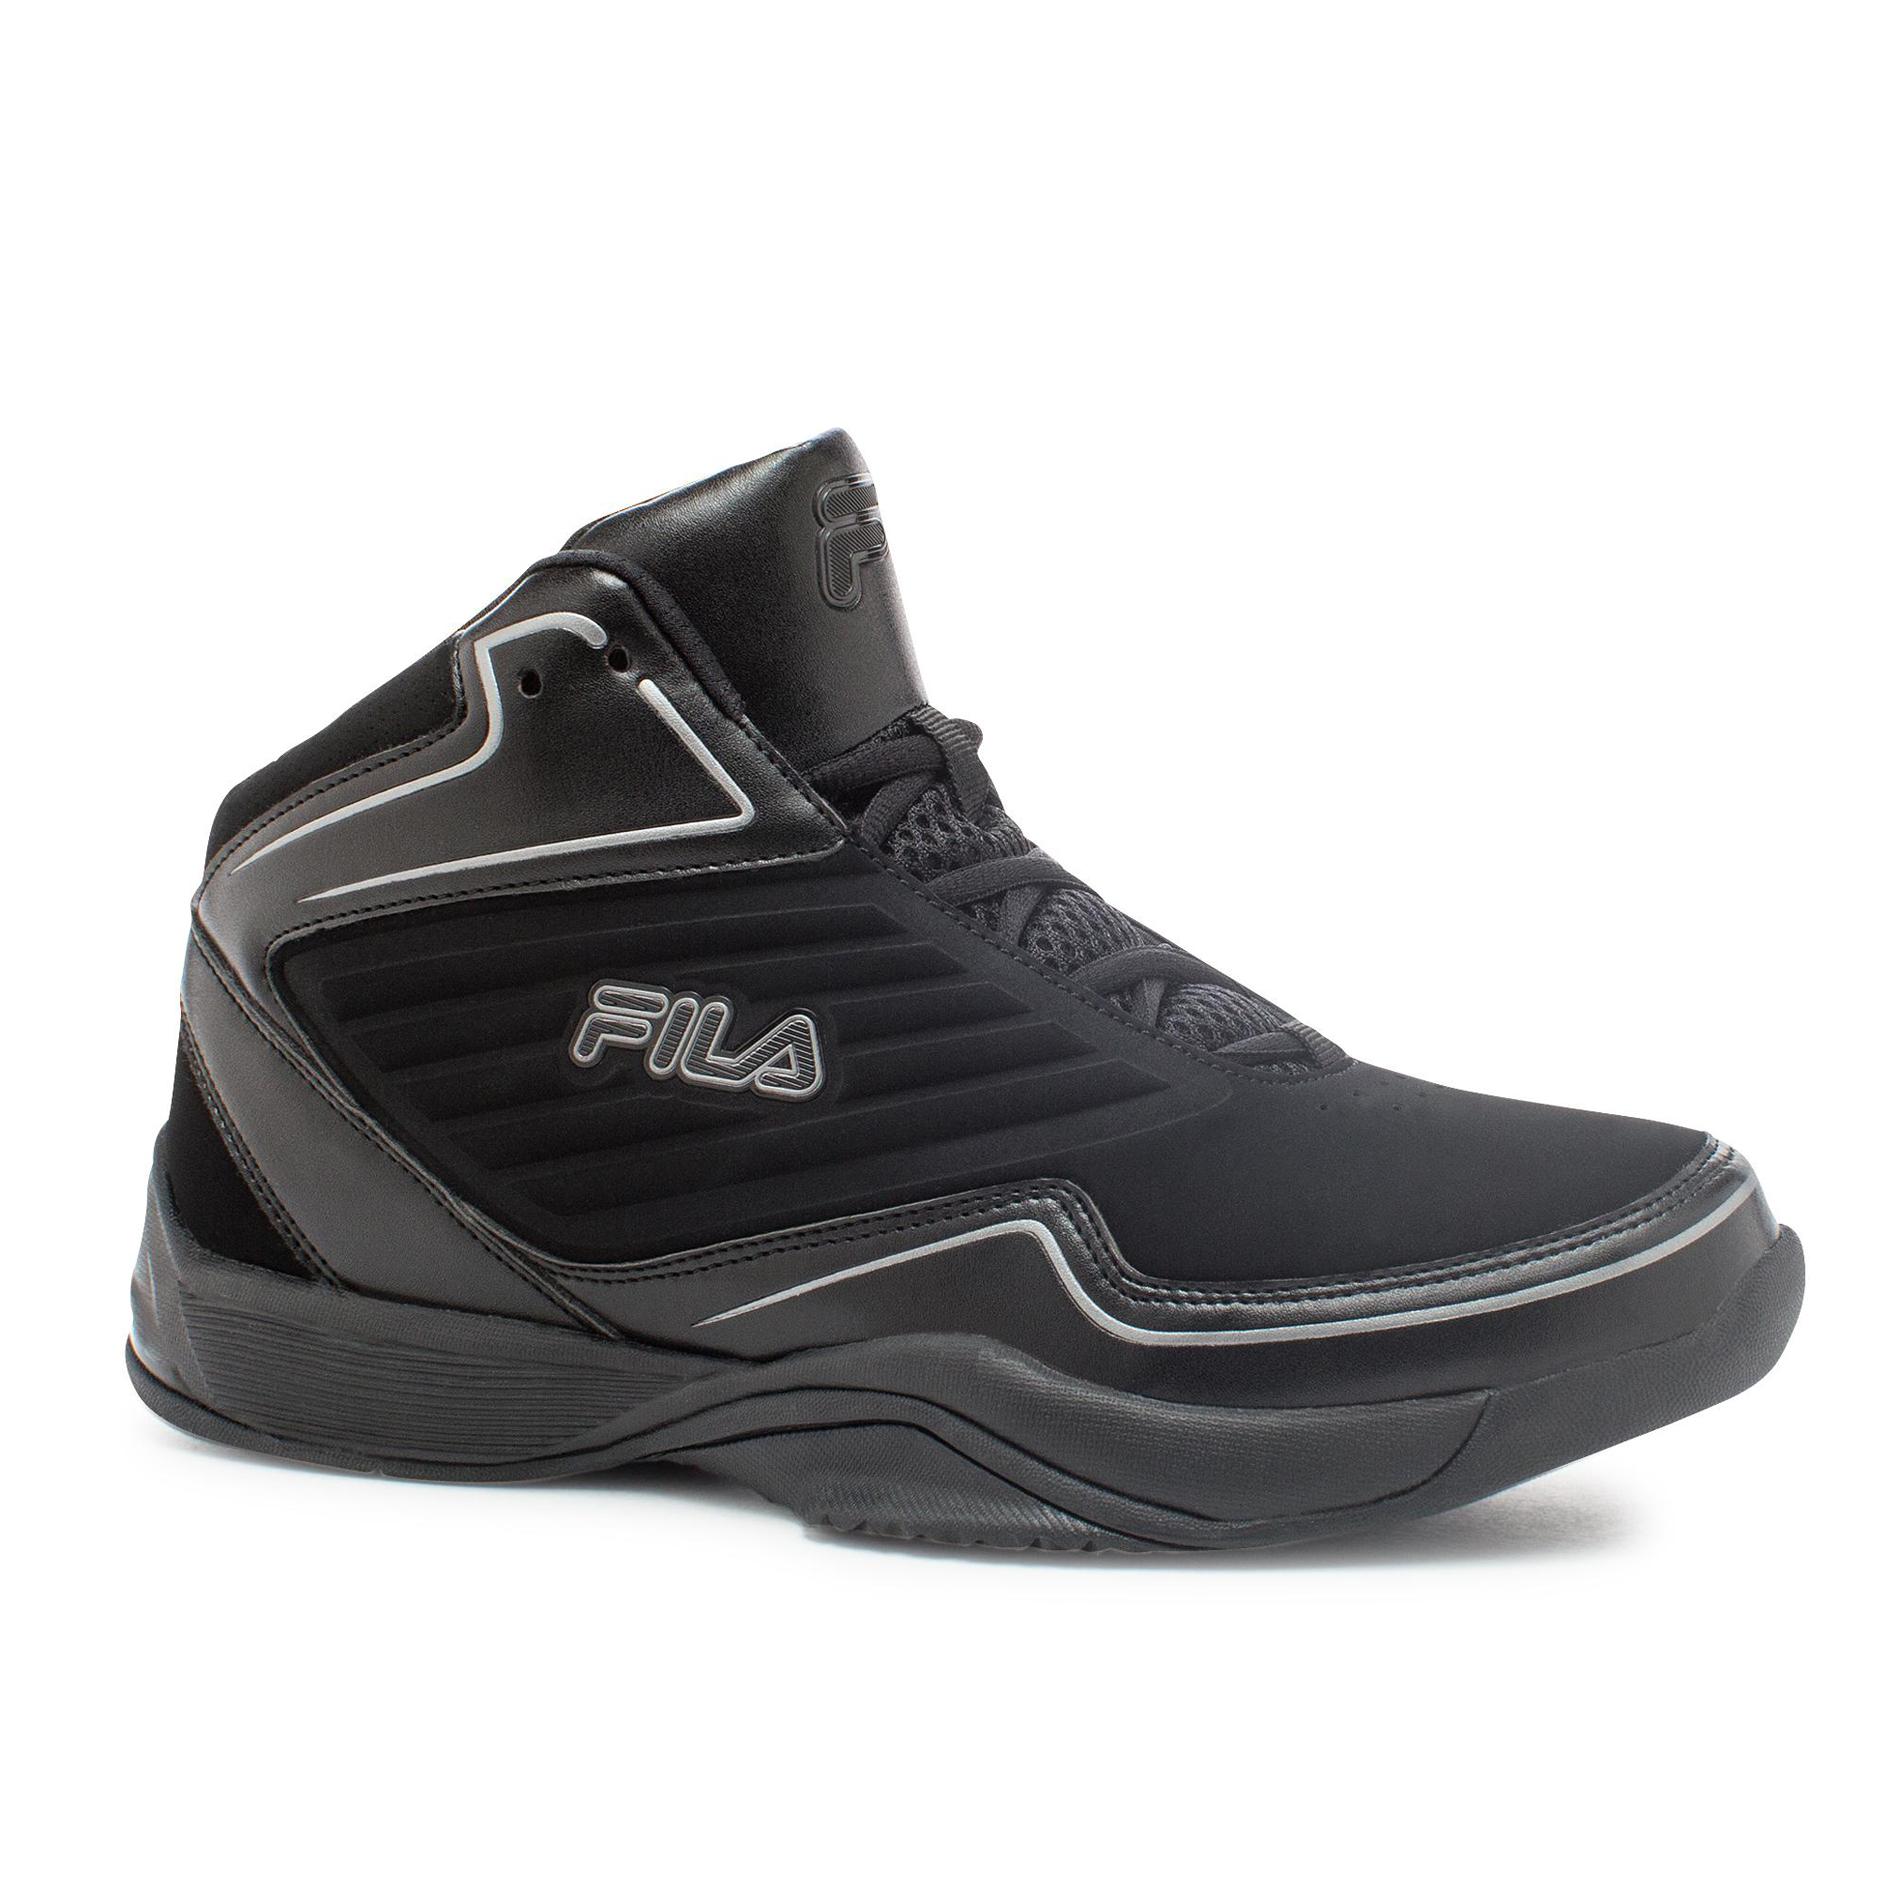 Fila Men's Import Athletic Shoe - Black